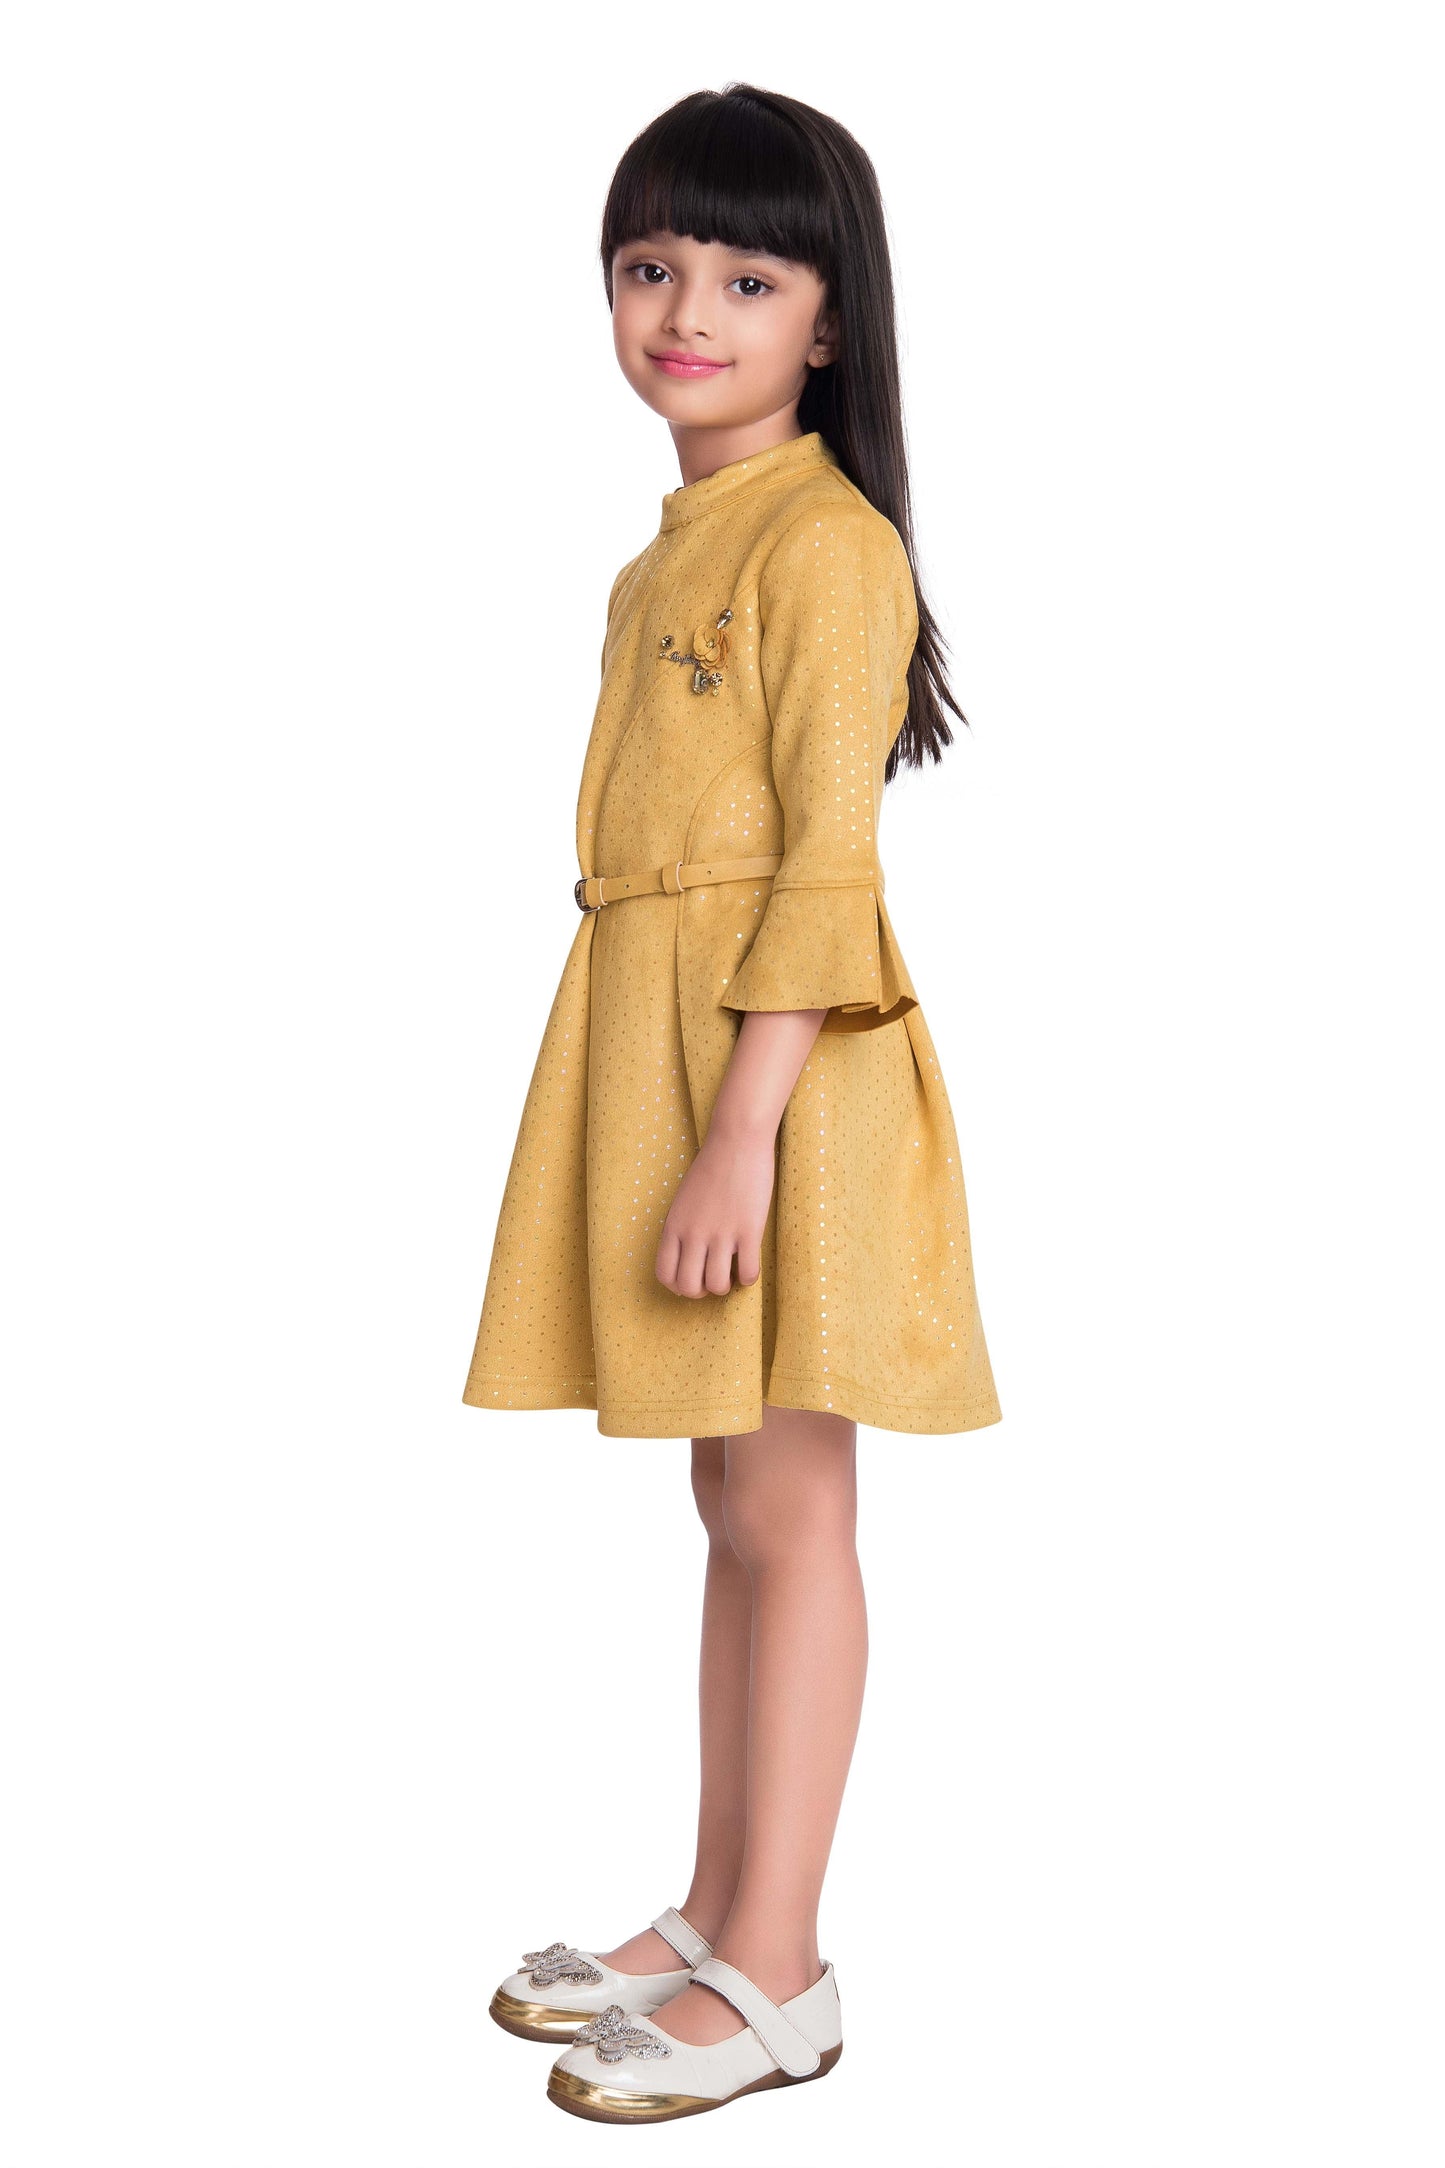 Tiny Baby Mustard Colored Dress - 2022 Mustard - TINY BABY INDIA shop.tinybaby.in